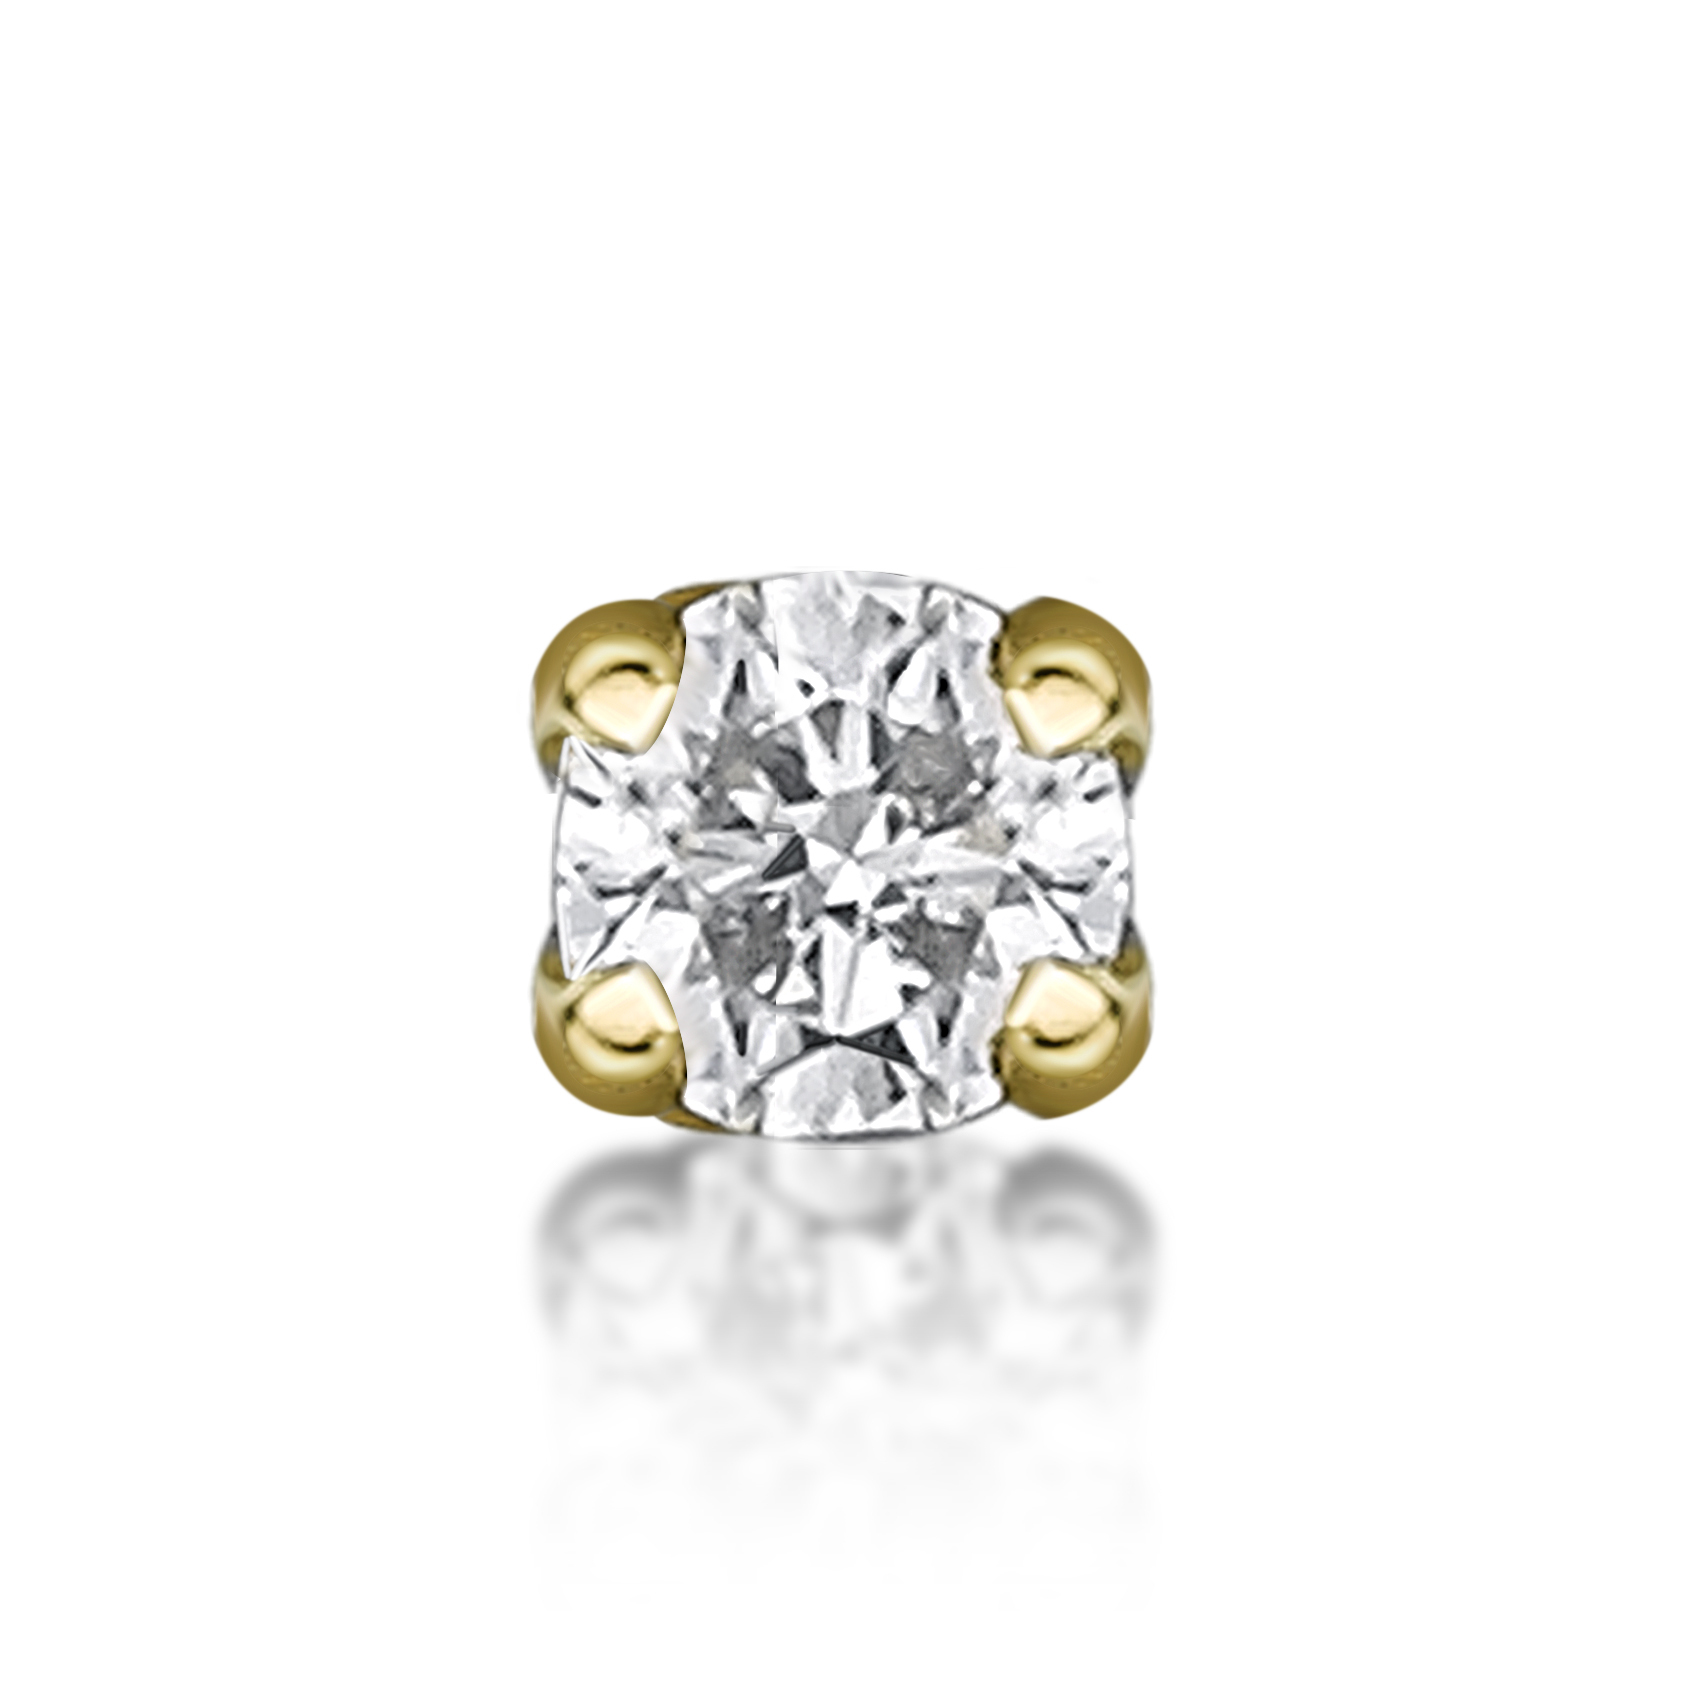 Lavari Jewelers Women's White Diamond 14K Yellow Gold Stud Nose Ring, 0.01 Carat, 18 Gauge